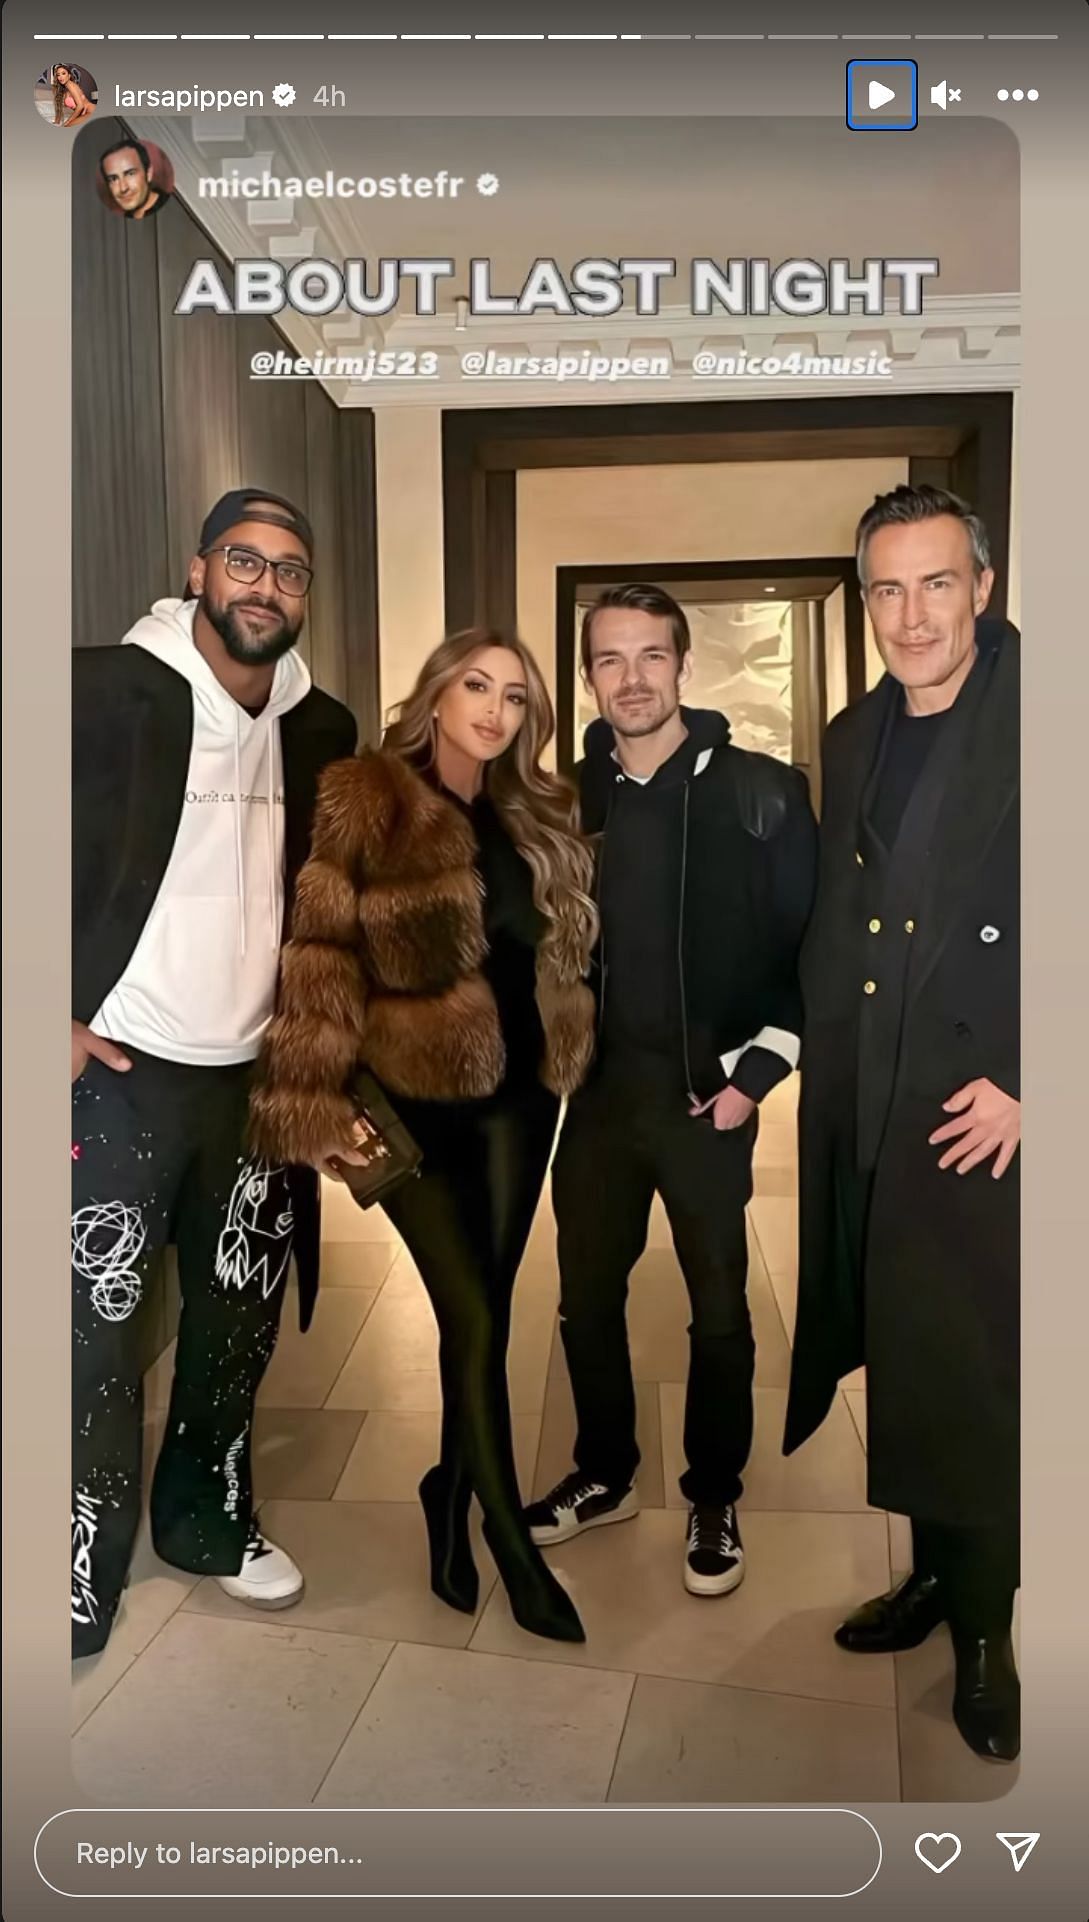 Larsa Pippen and Marcus Jordan continue to enjoy their in Paris (Image source: Instagram @larsapippen)